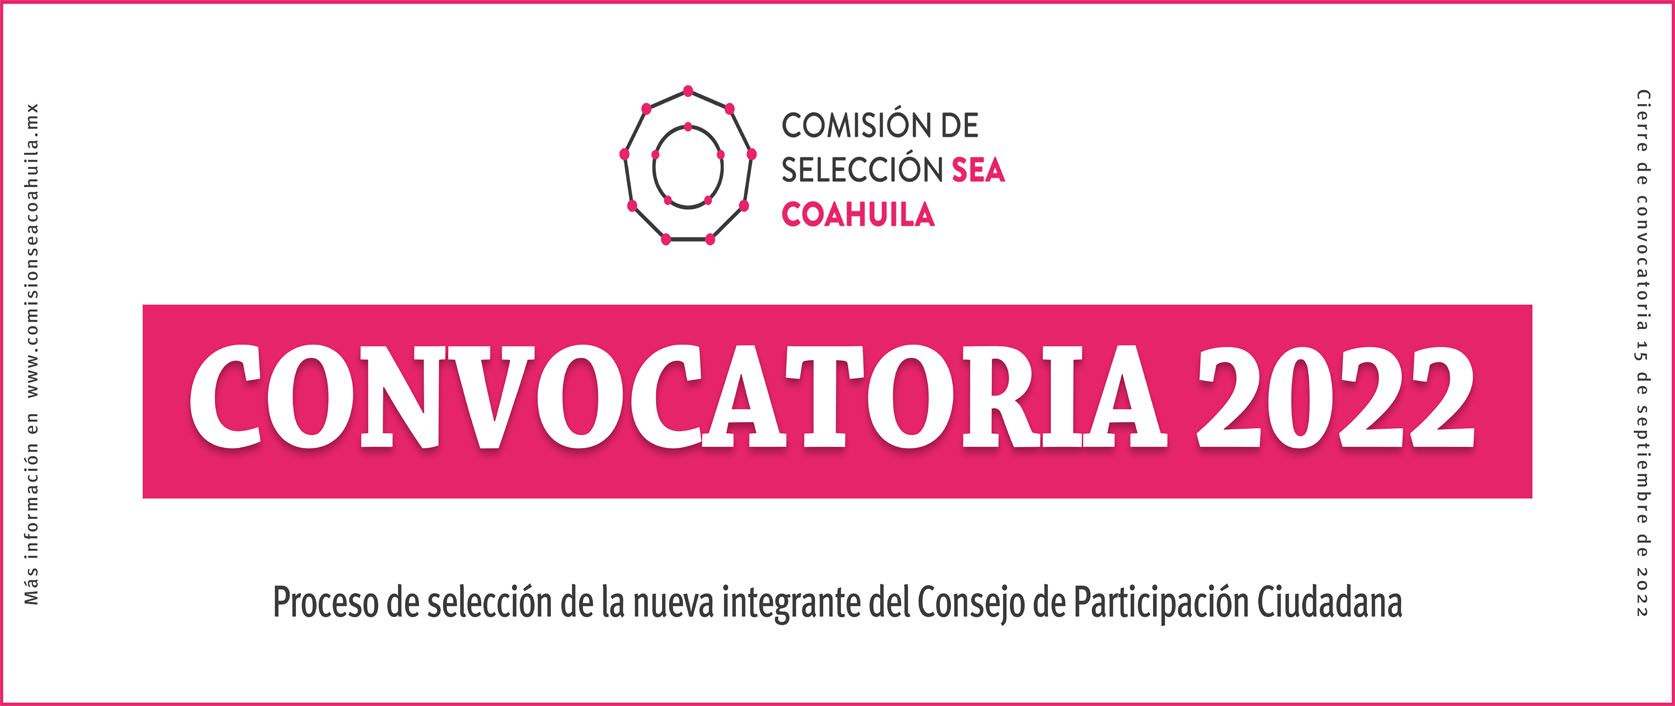 Comisión de Selección Sea Coahuila Convocatoria 2022